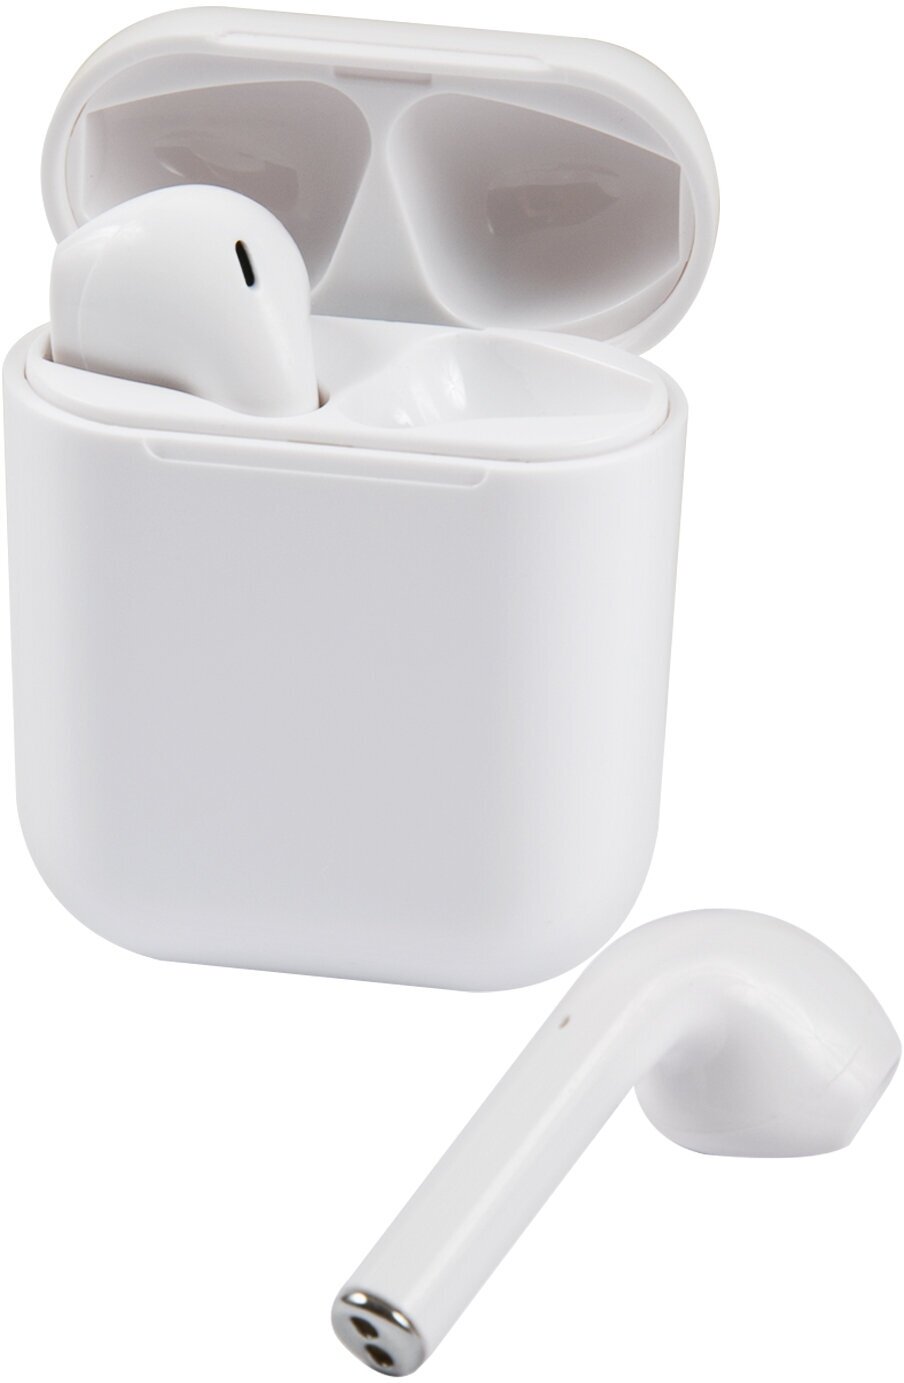 Наушники беспроводные Bluetooth 5.0/Блютуз наушники с микрофоном/Bluetooth наушники для iphone, android/Блютуз гарнитура белый